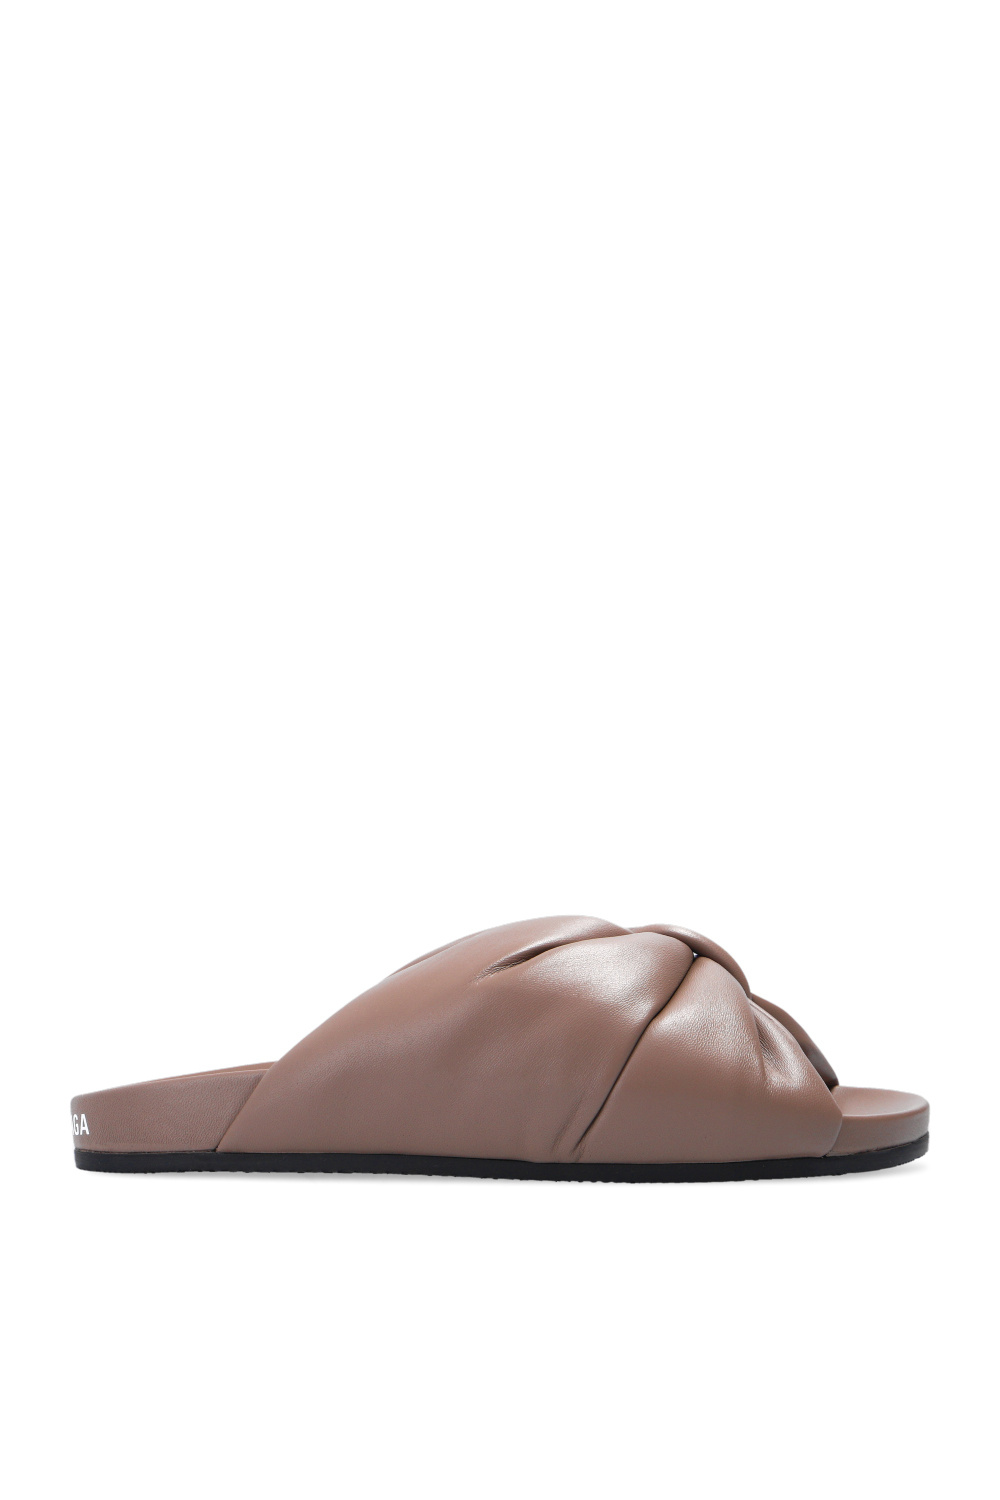 Balenciaga ‘Puffy’ leather slides